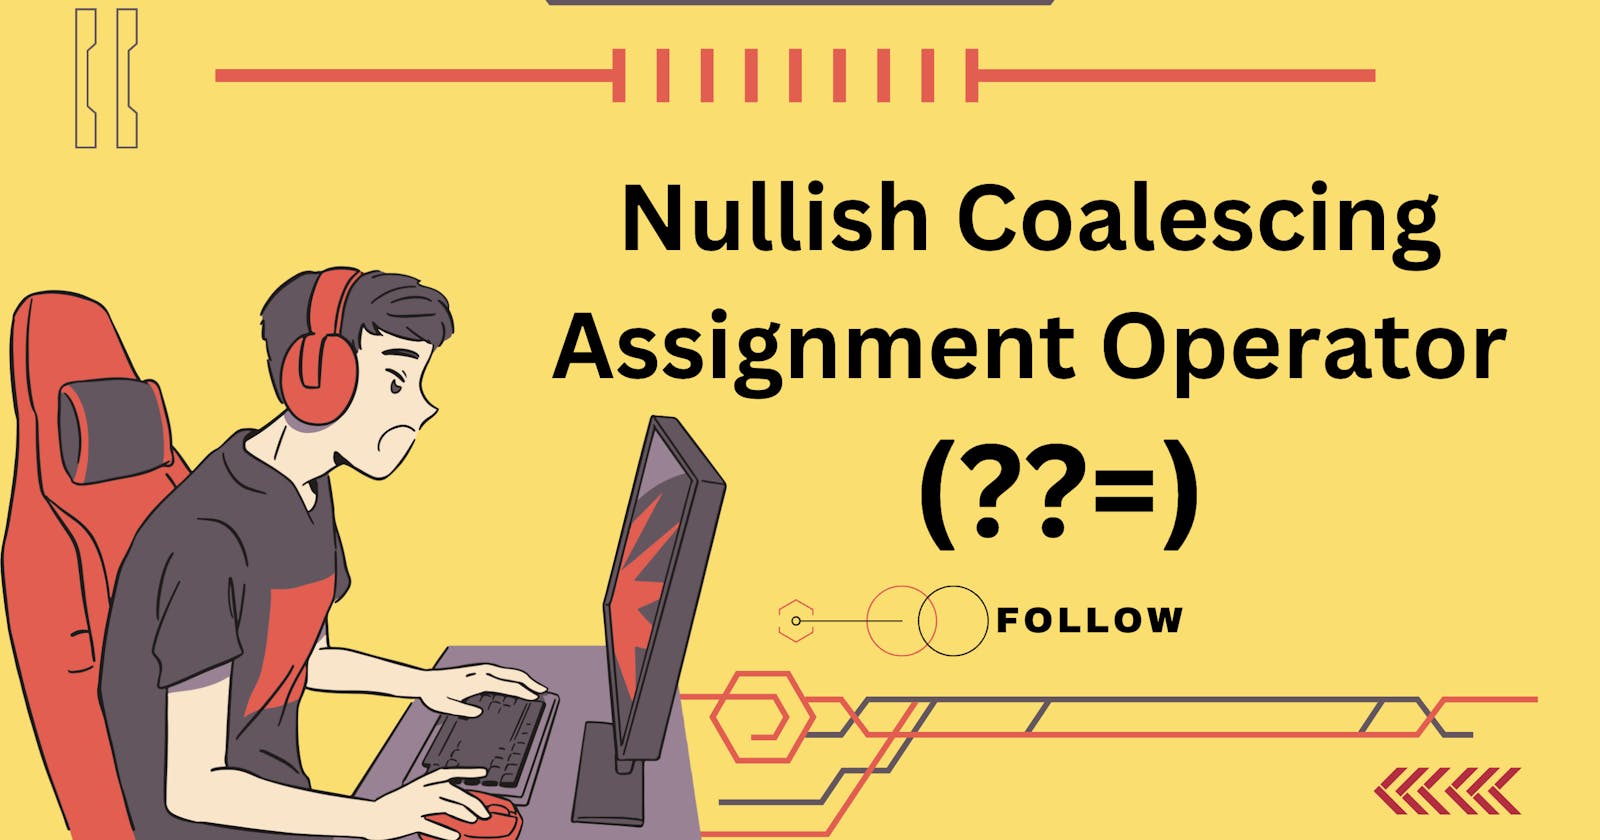 Nullish Coalescing Assignment Operator in JavaScript